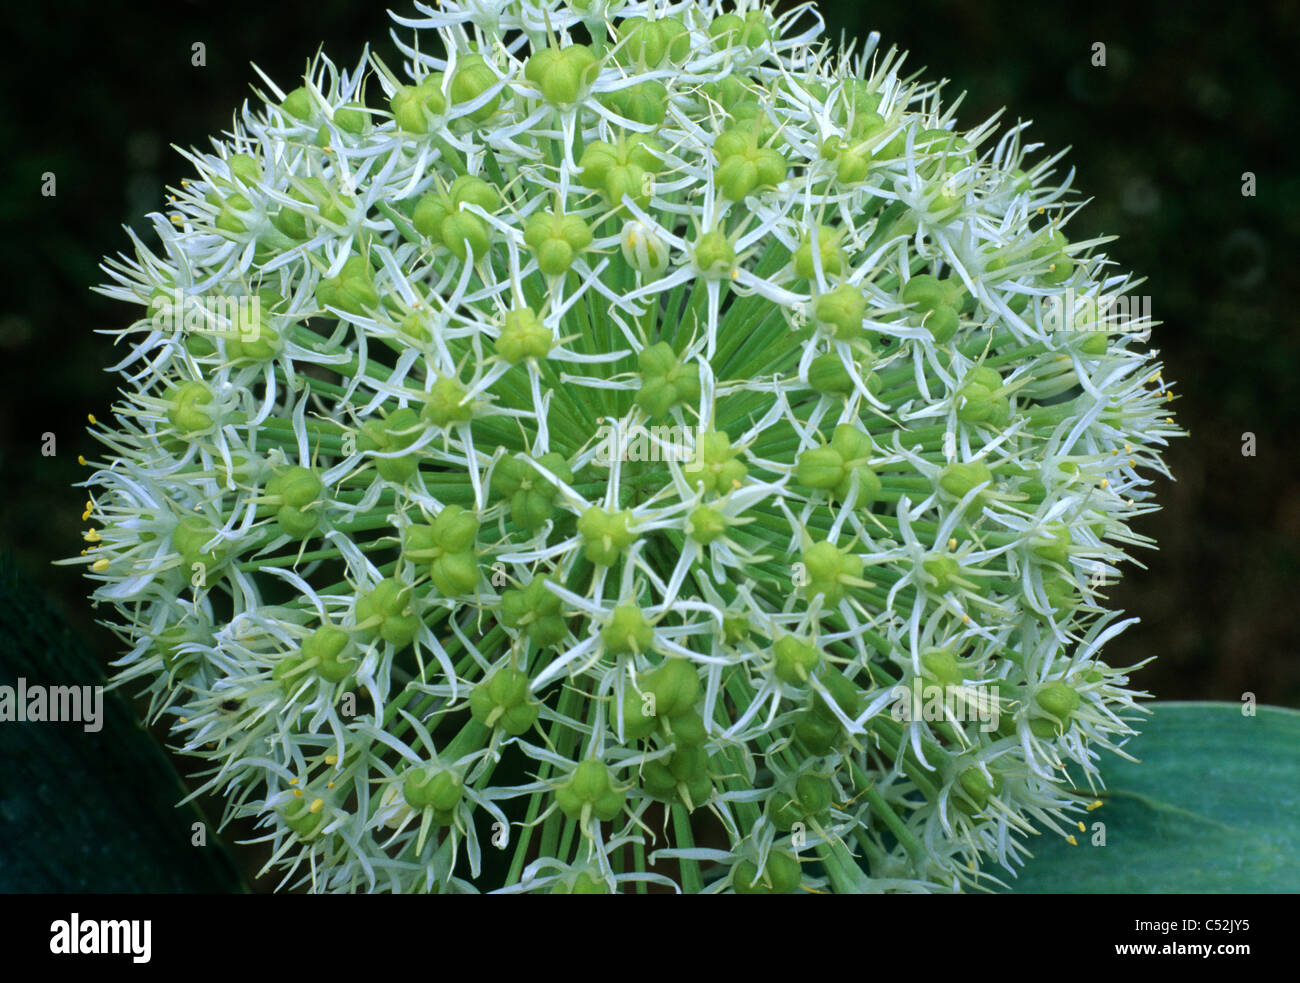 Allium karataviense Queen' alliums garden plant plants cream flower flowers onion family onions Stock Photo - Alamy